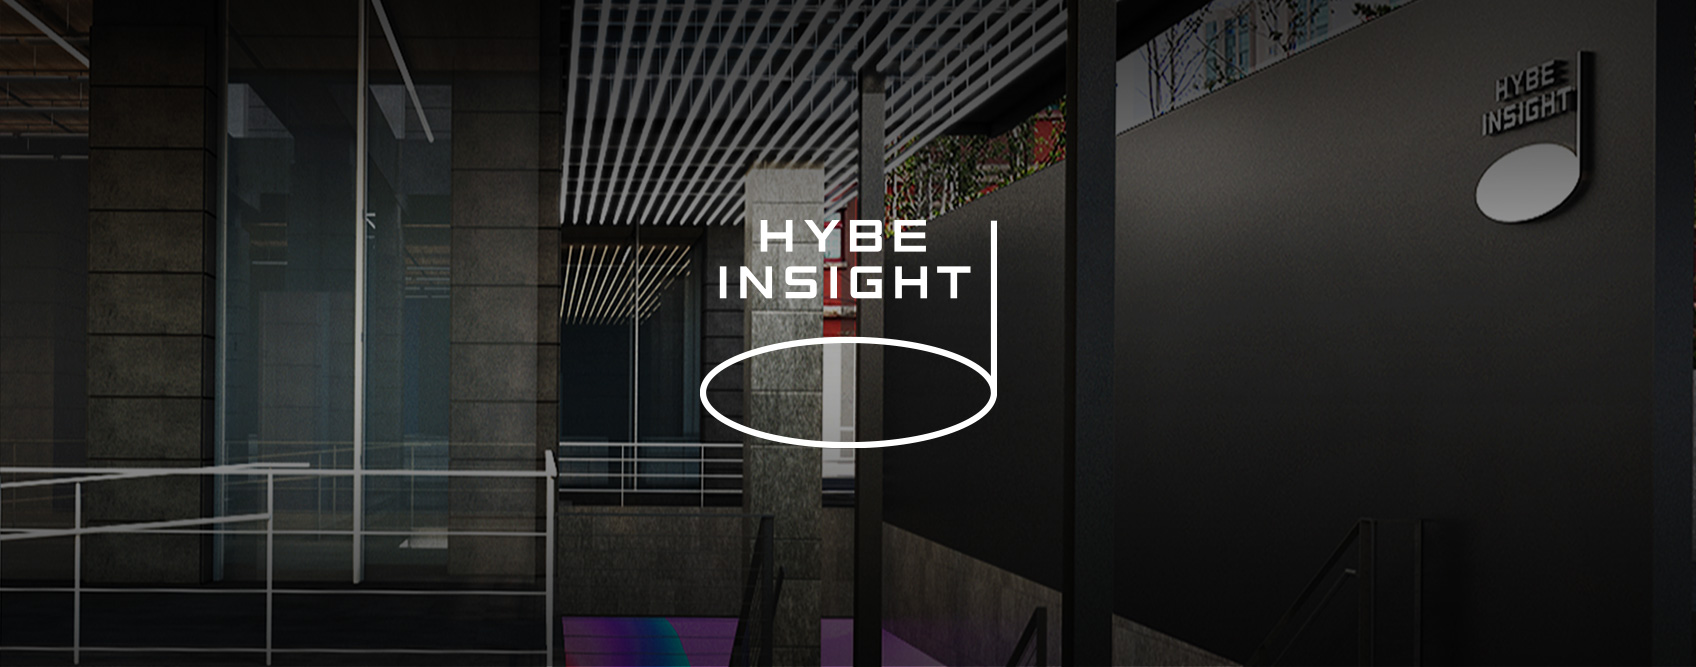 HYBE Insight Microsite